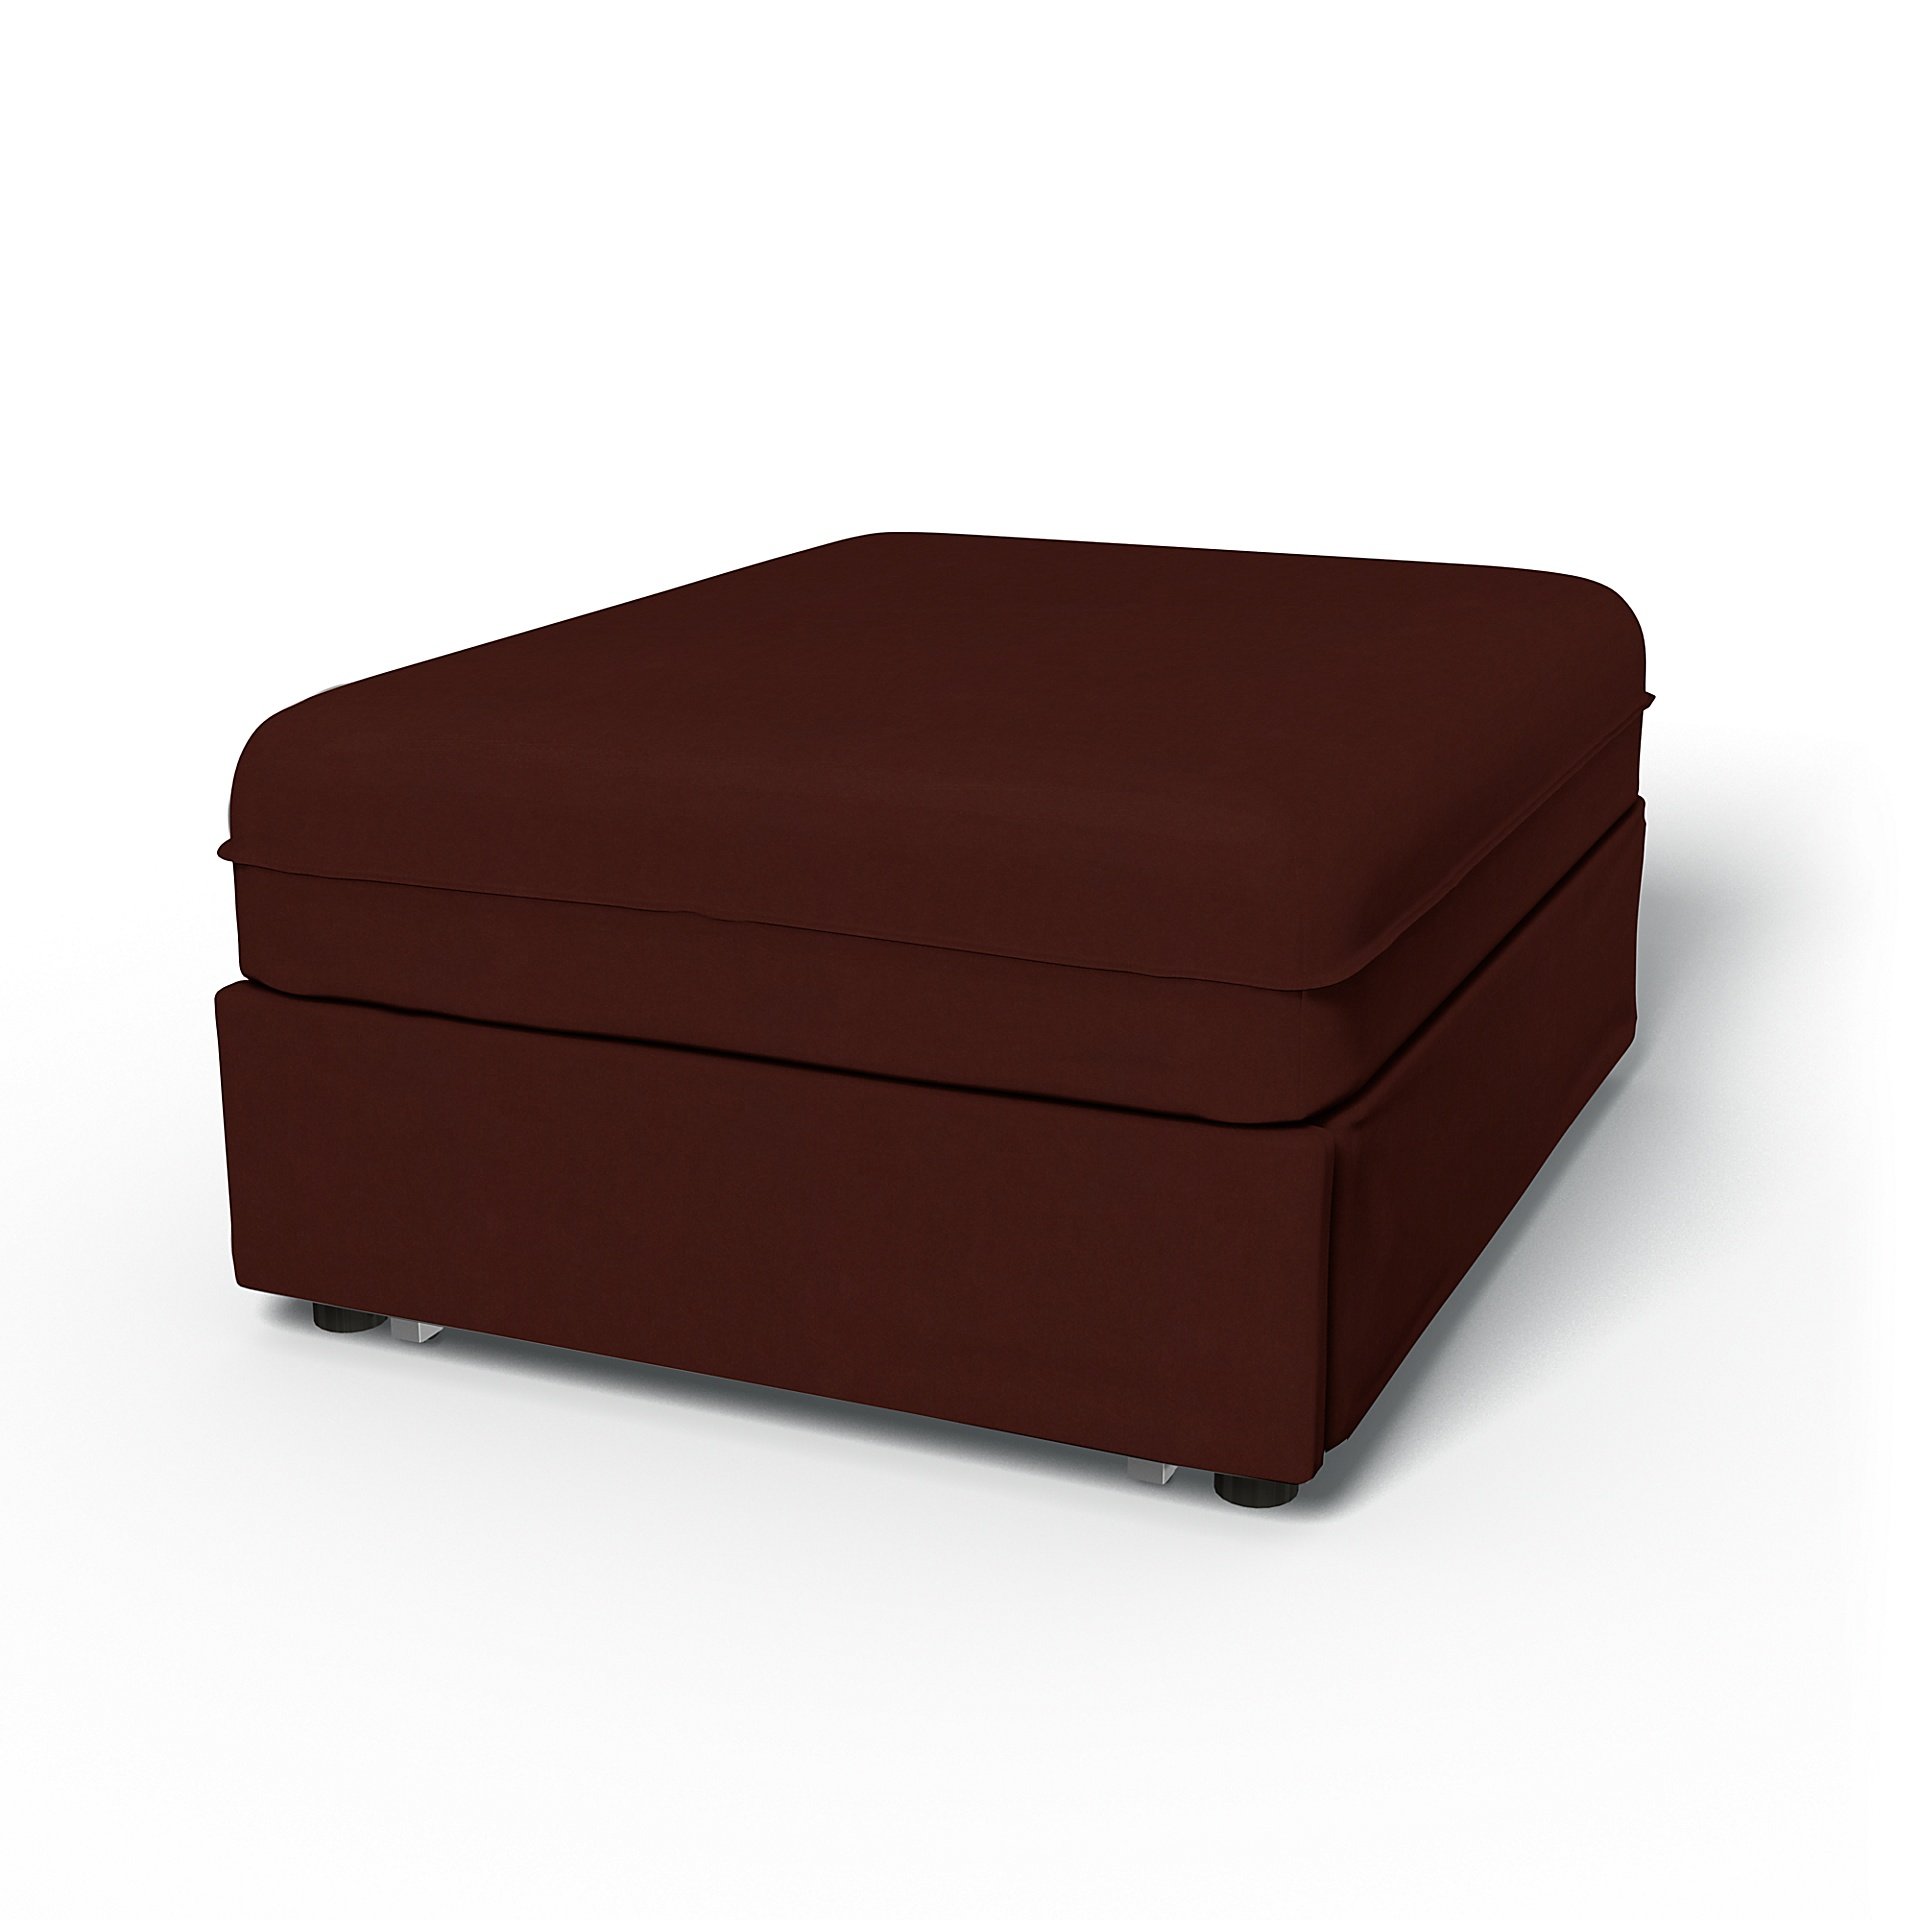 IKEA - Vallentuna Seat Module with Sofa Bed Cover 80x100cm 32x39in, Ground Coffee, Velvet - Bemz